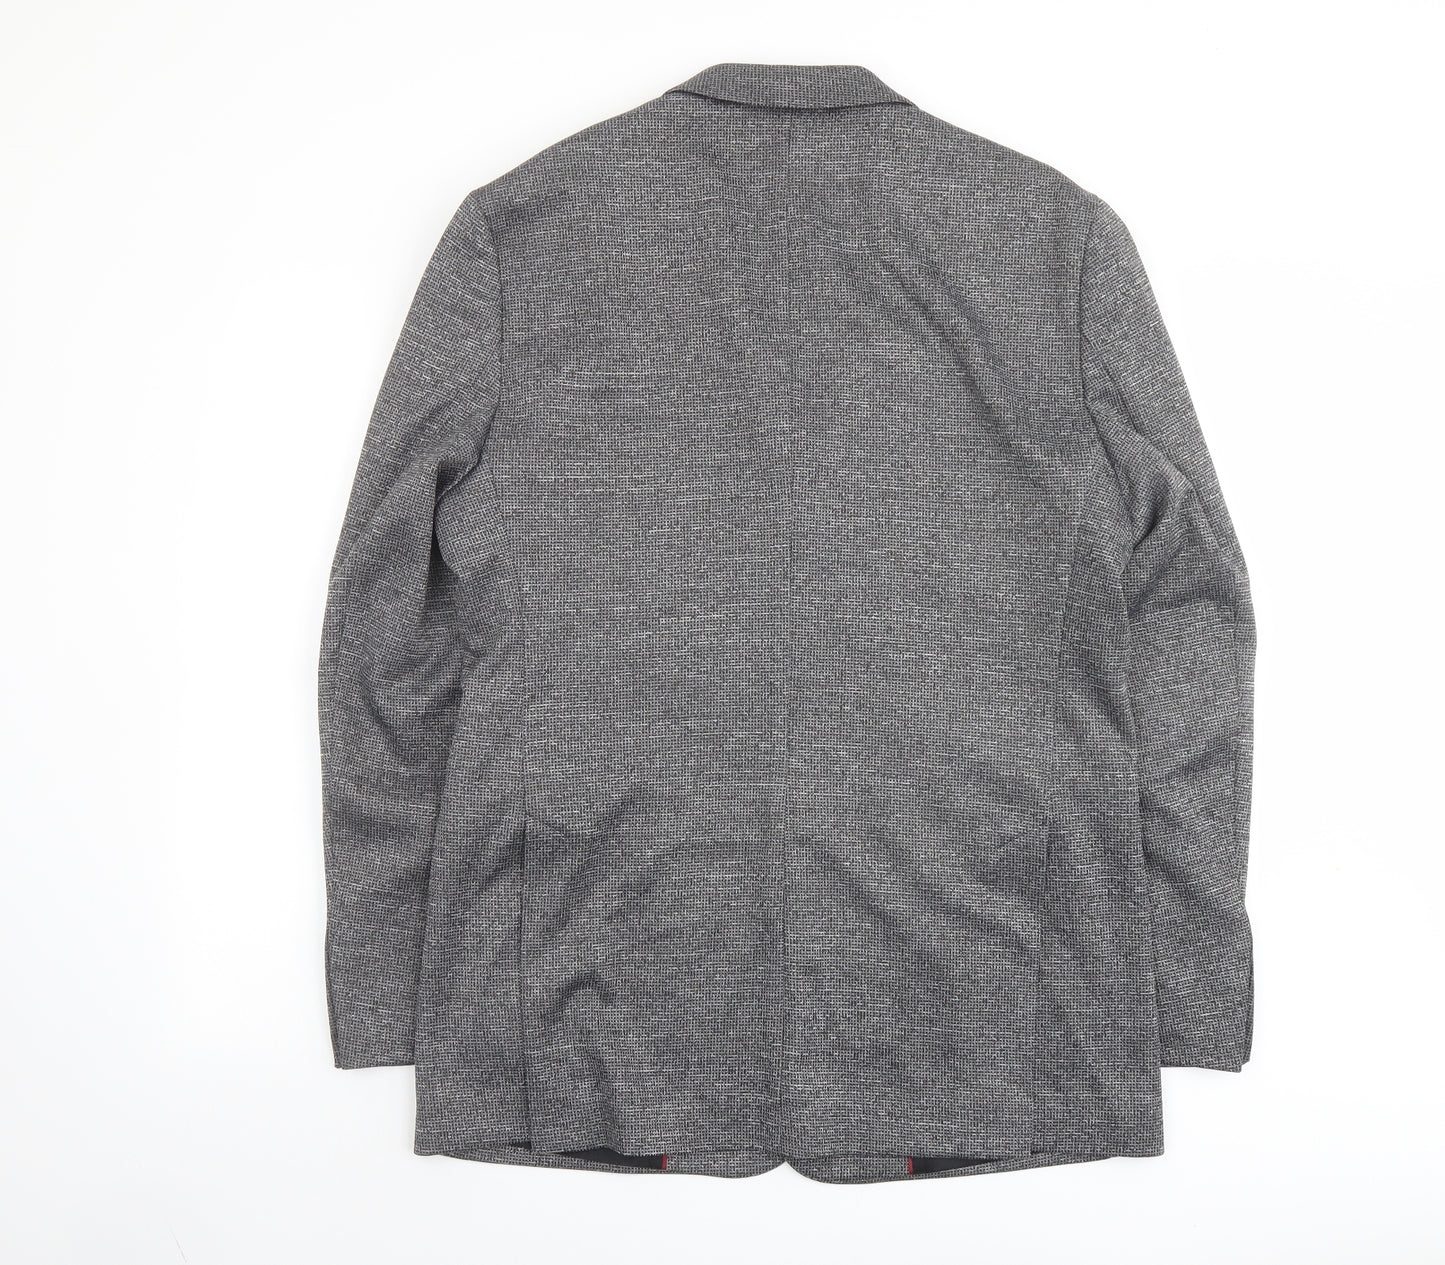 Zara Mens Grey Polyester Jacket Suit Jacket Size 42 Regular